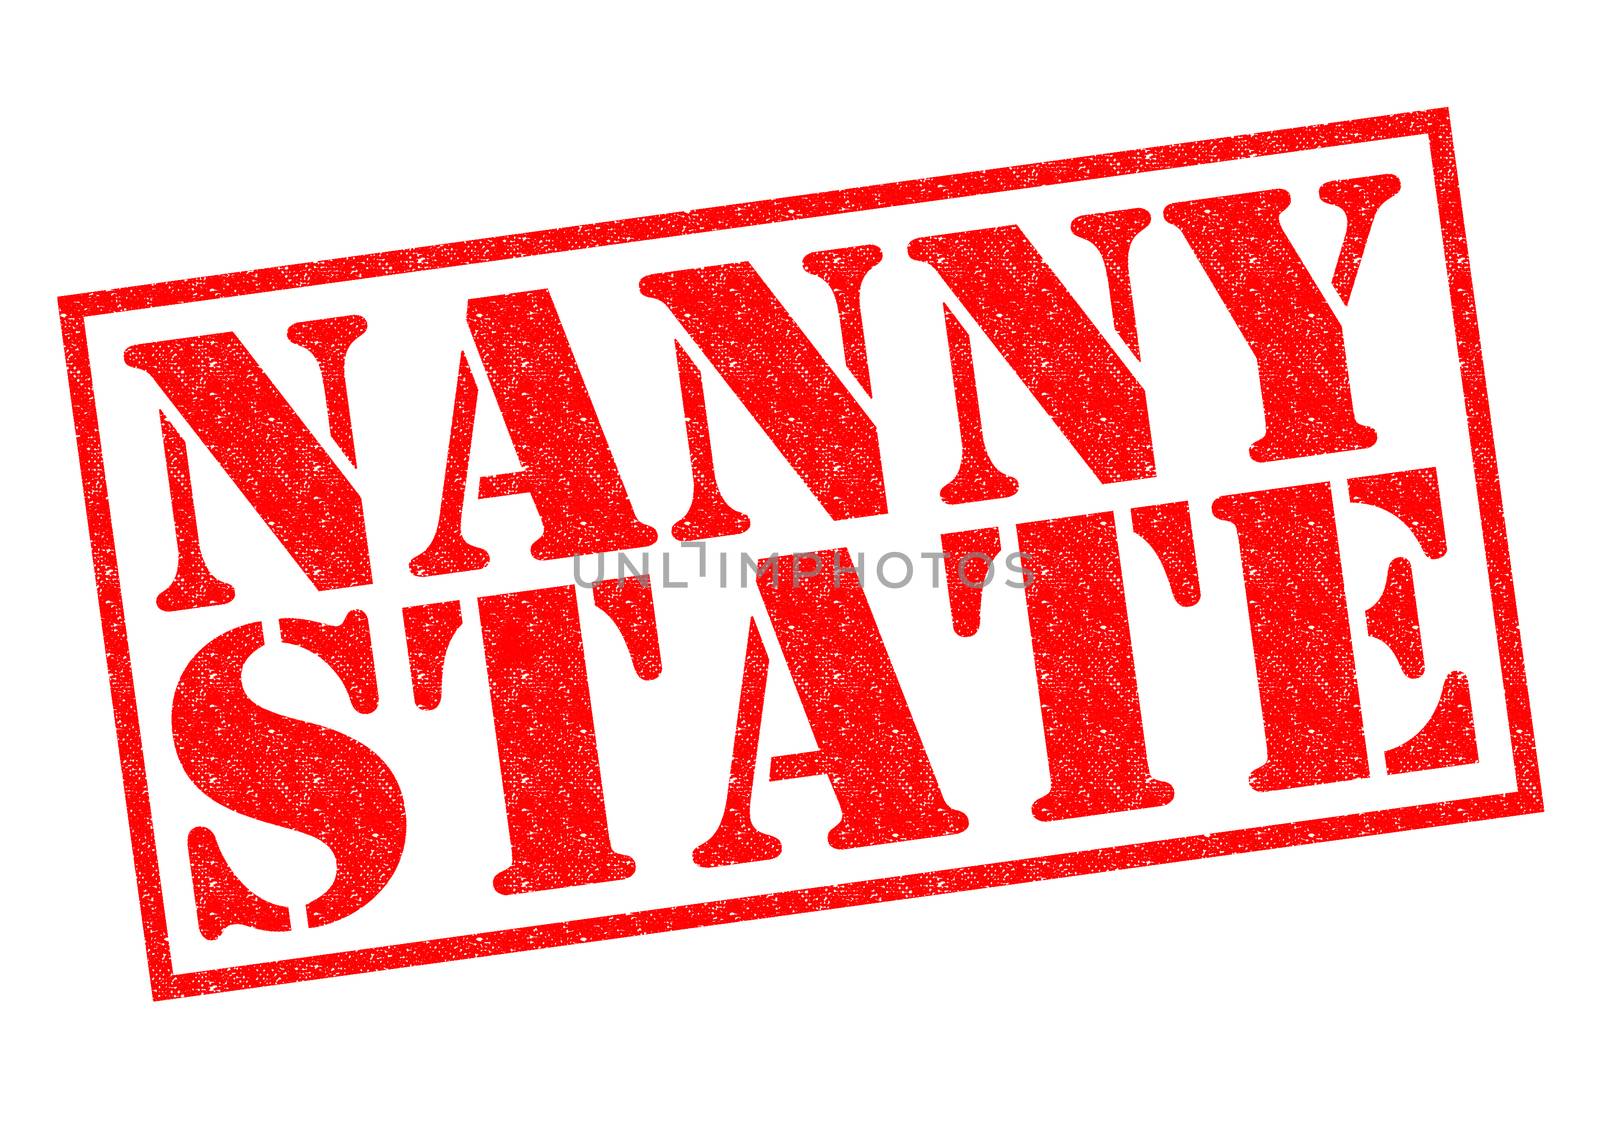 NANNY STATE by chrisdorney